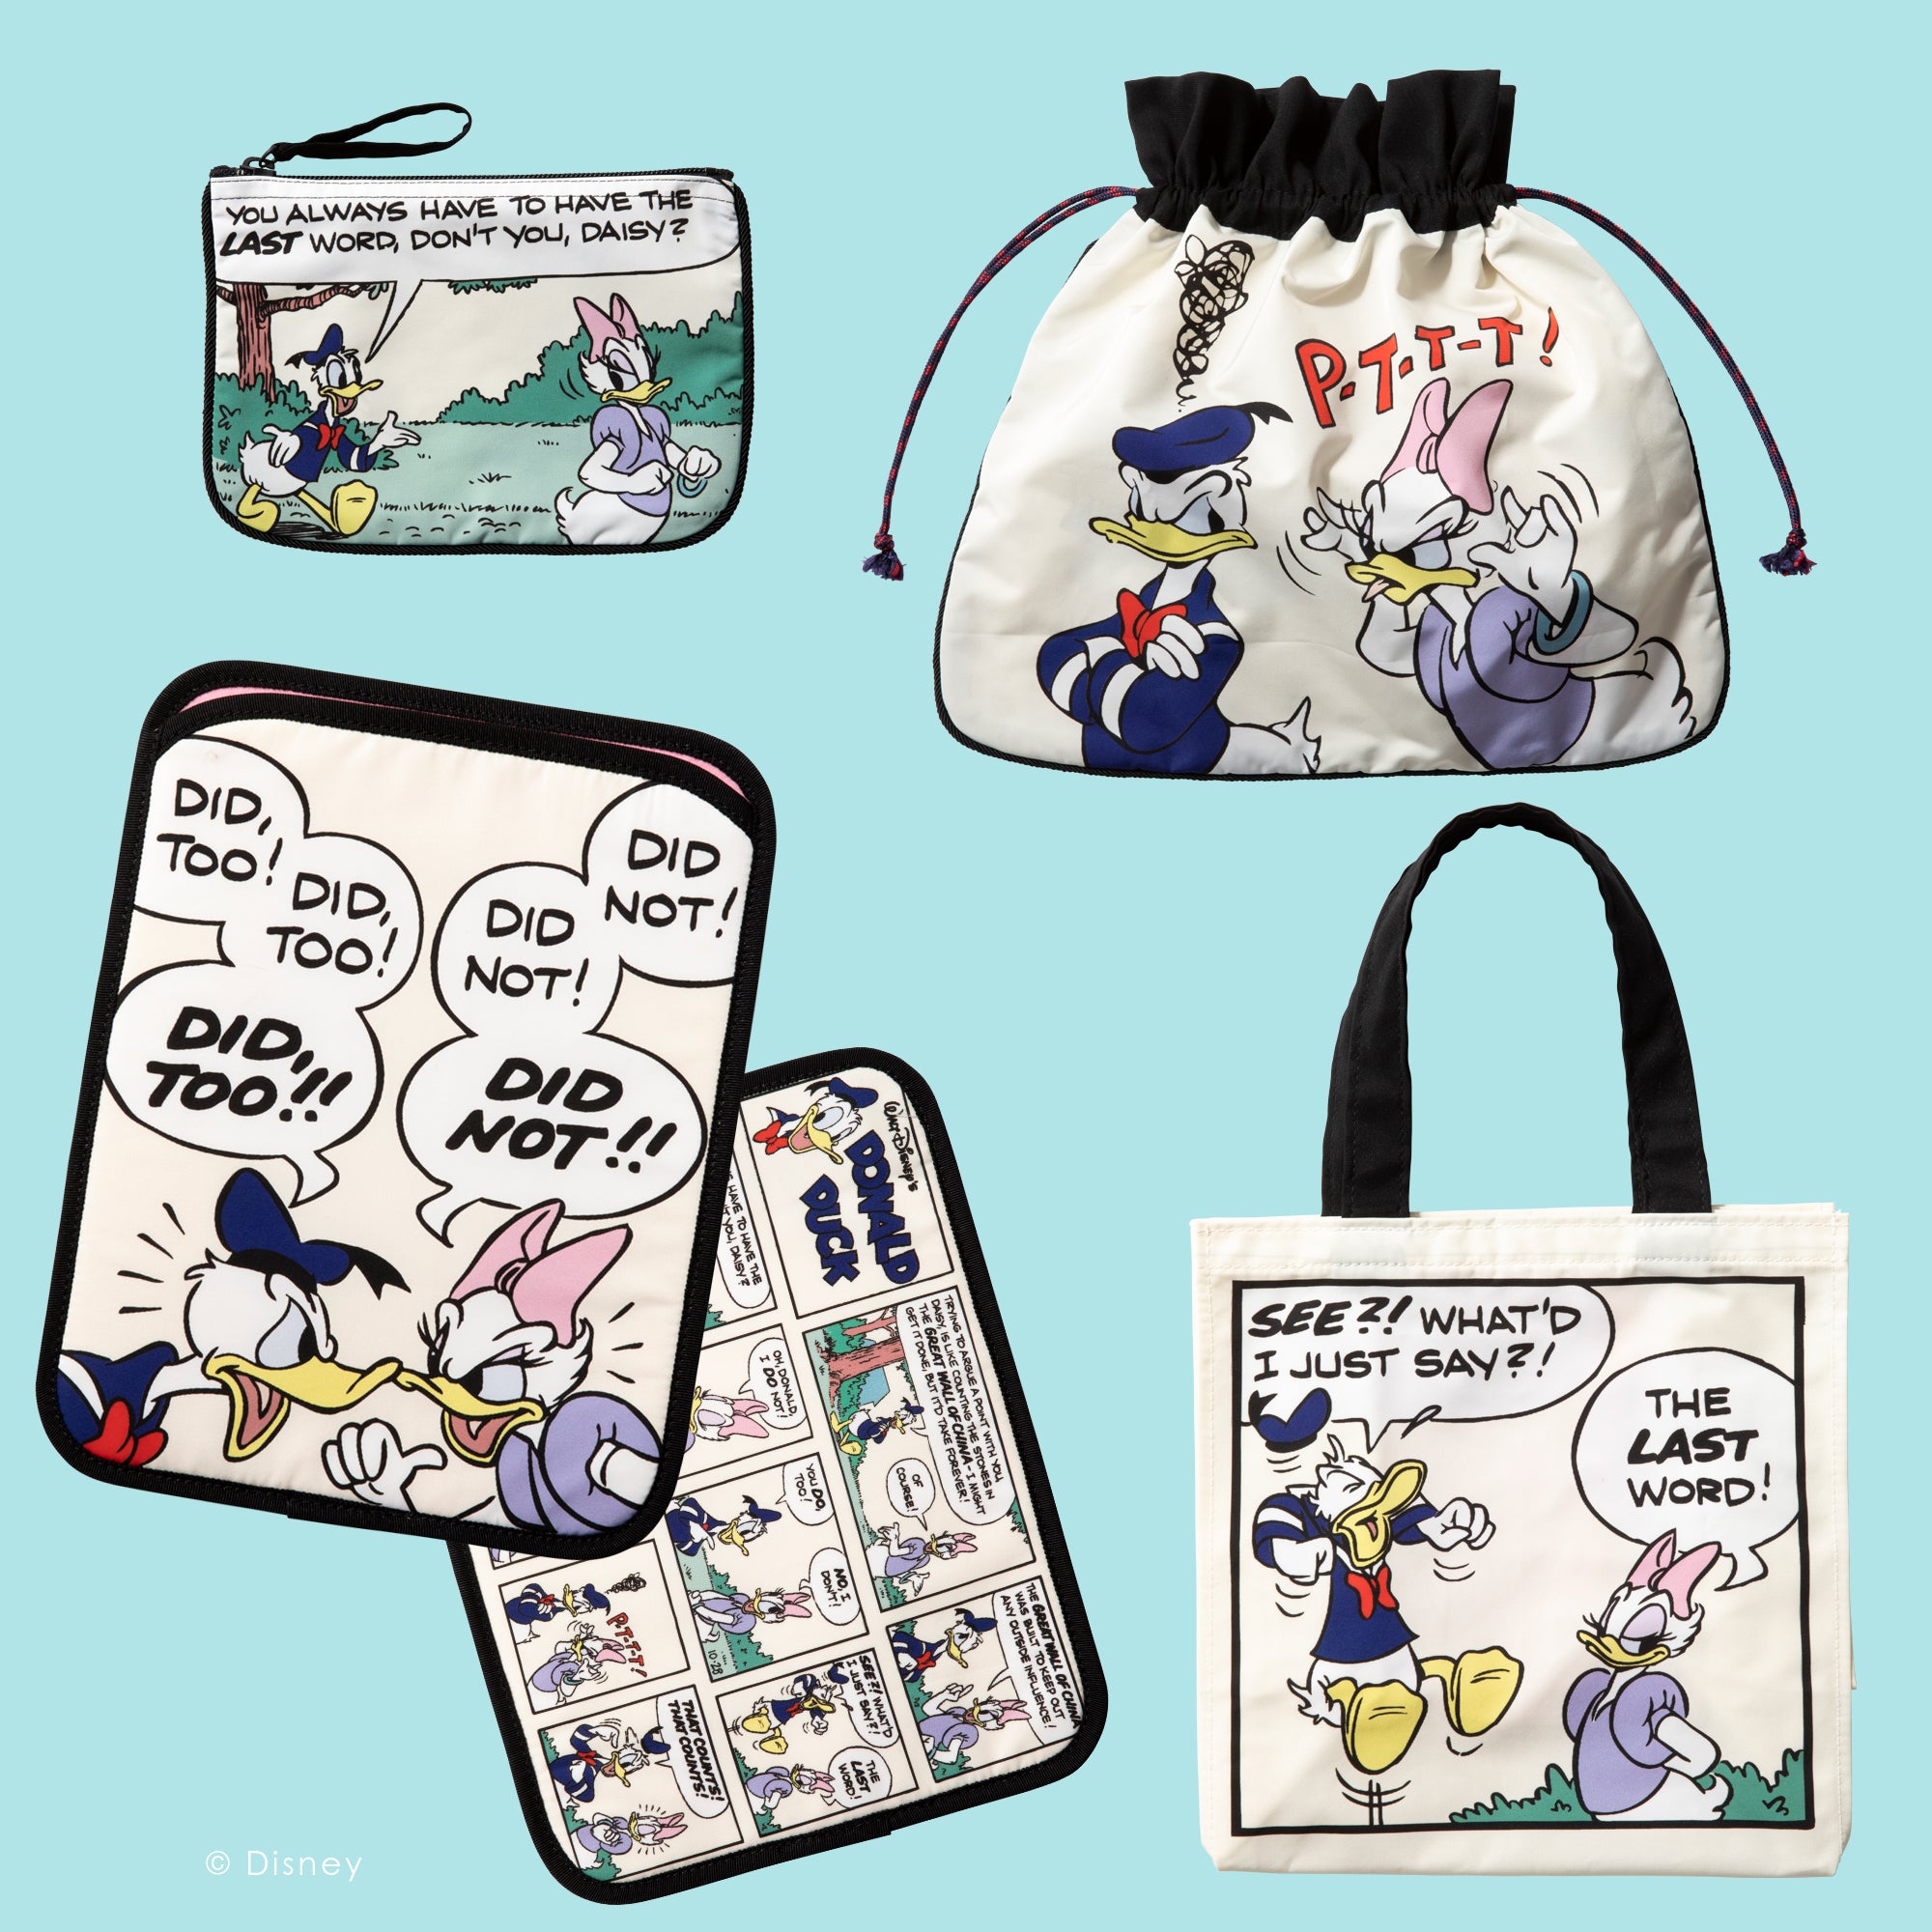 Donald Duck / Rain Tote Bag S